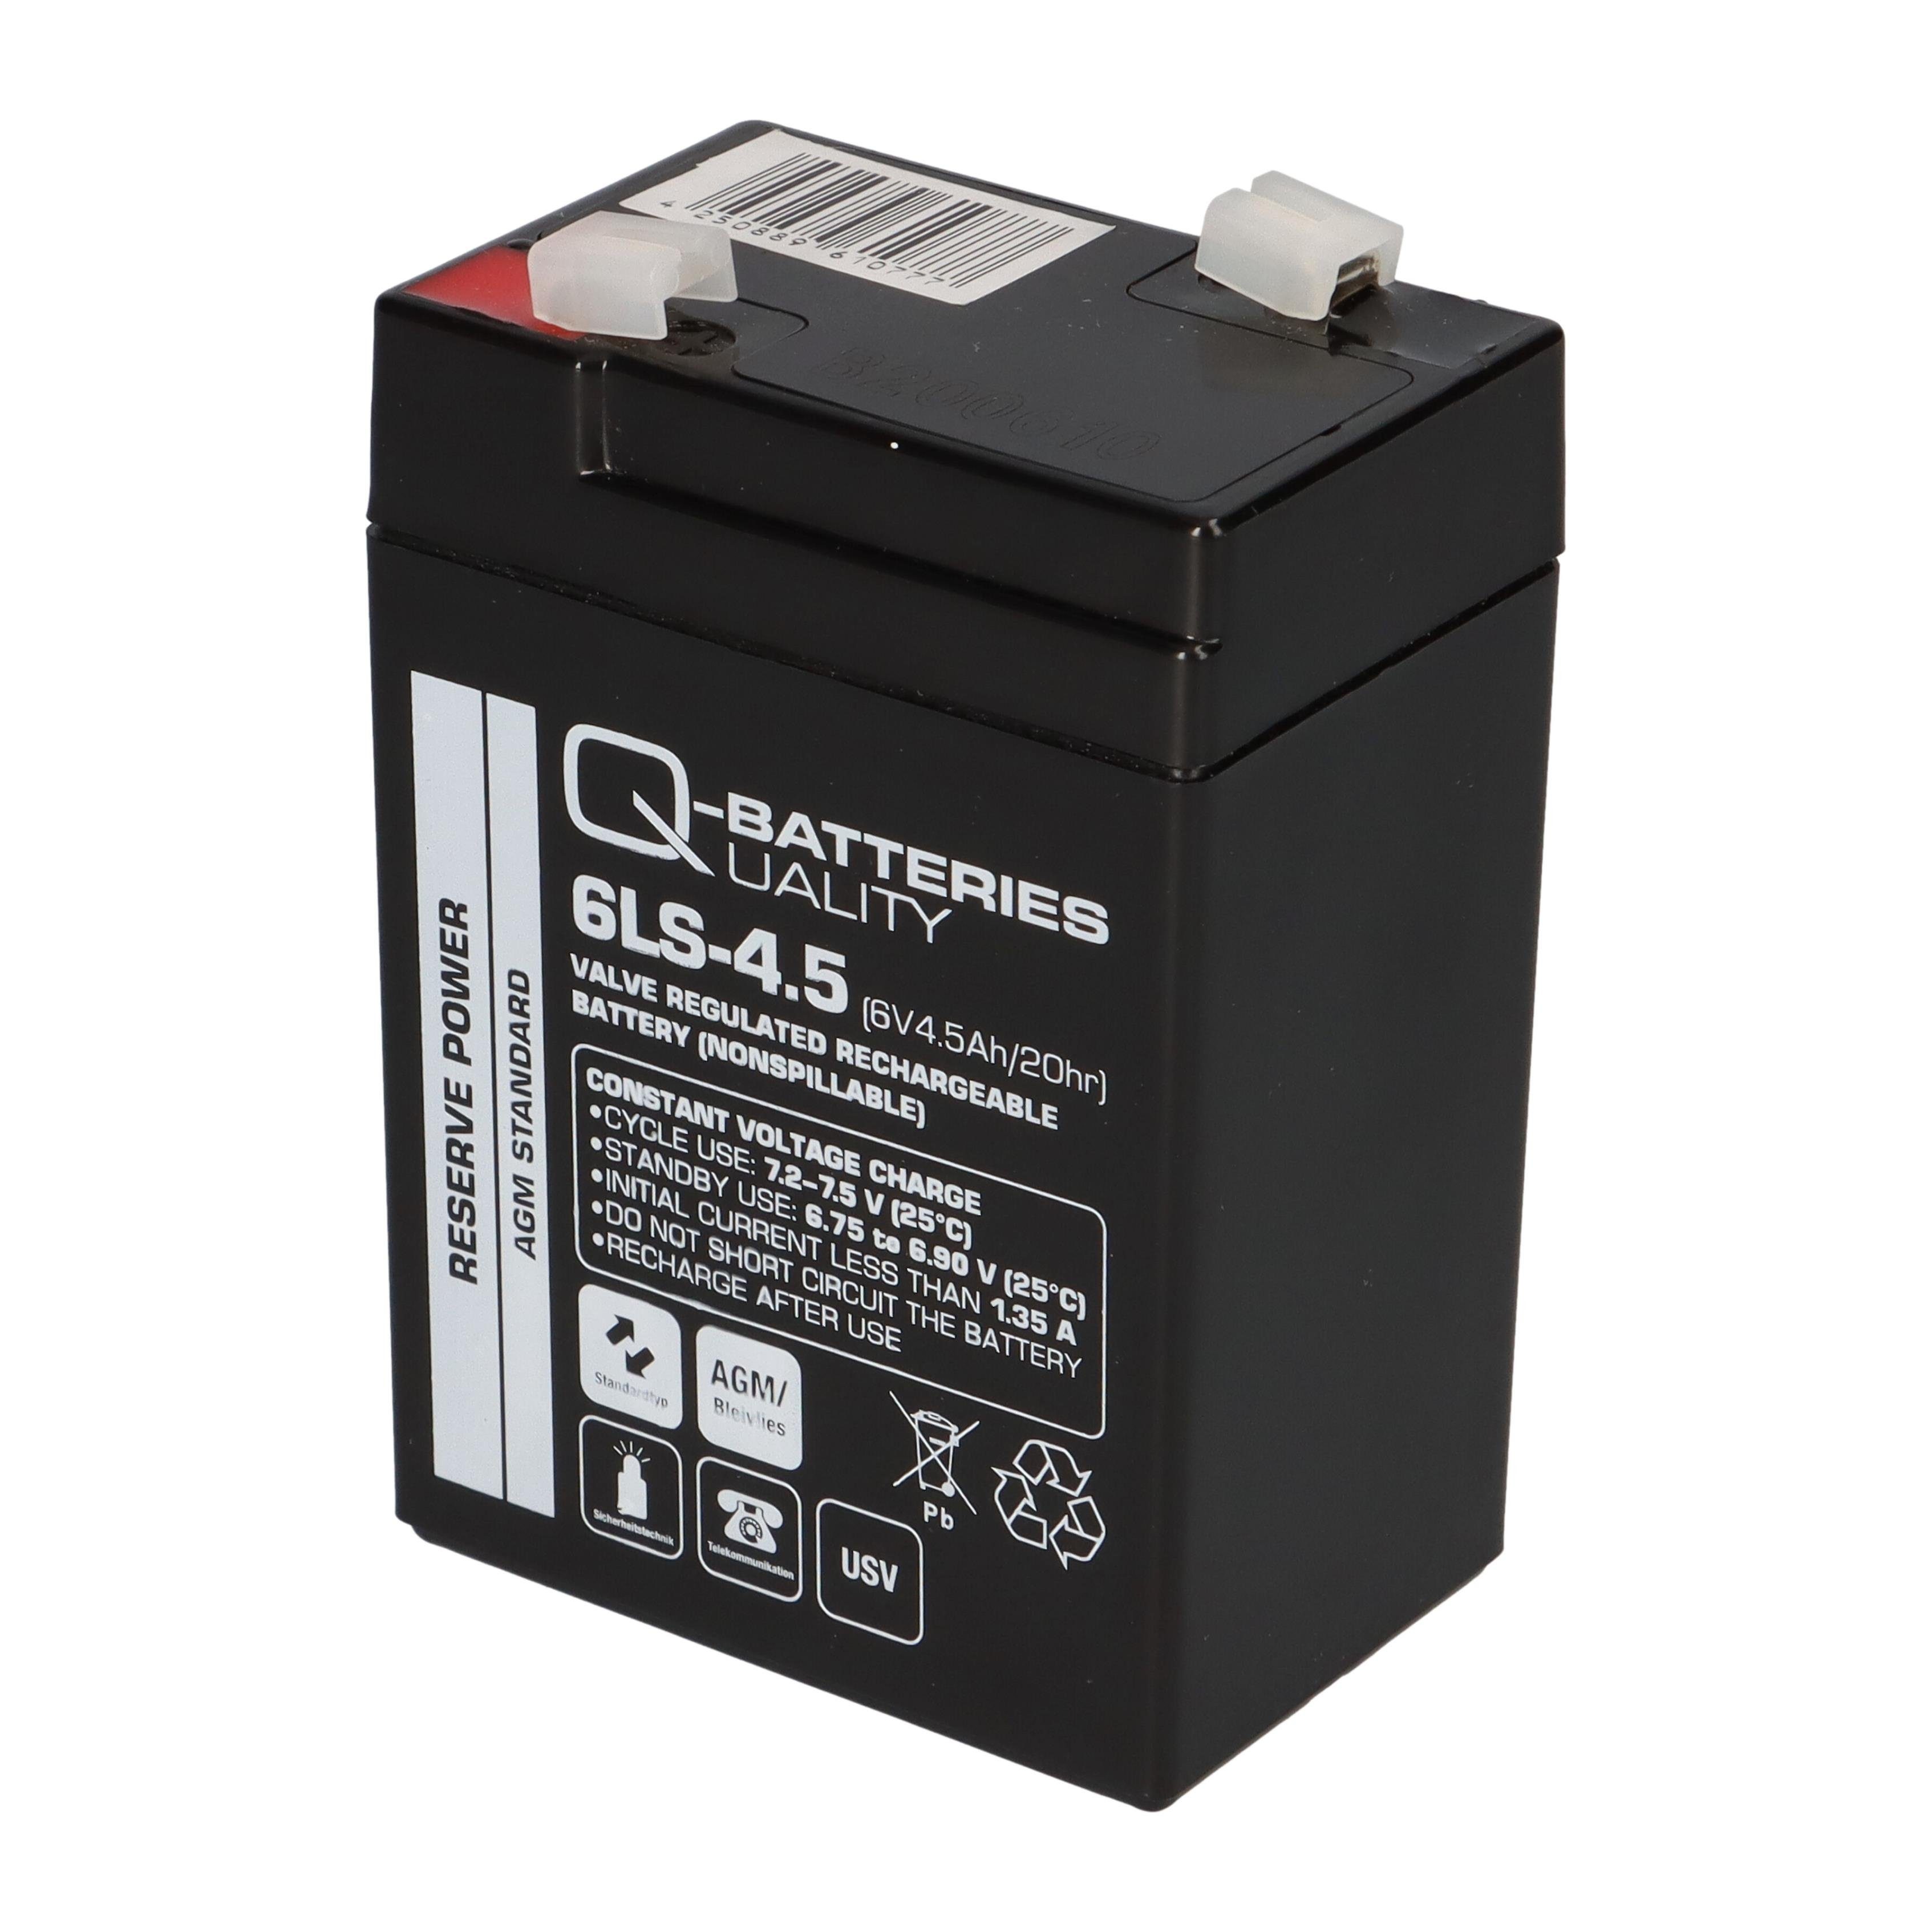 6-0,6 Ladegerät Q-Batteries BL 6V Blei-V 4,5Ah Blei 6LS-4.5 + Akku Bleiakkus Set Q-Batteries